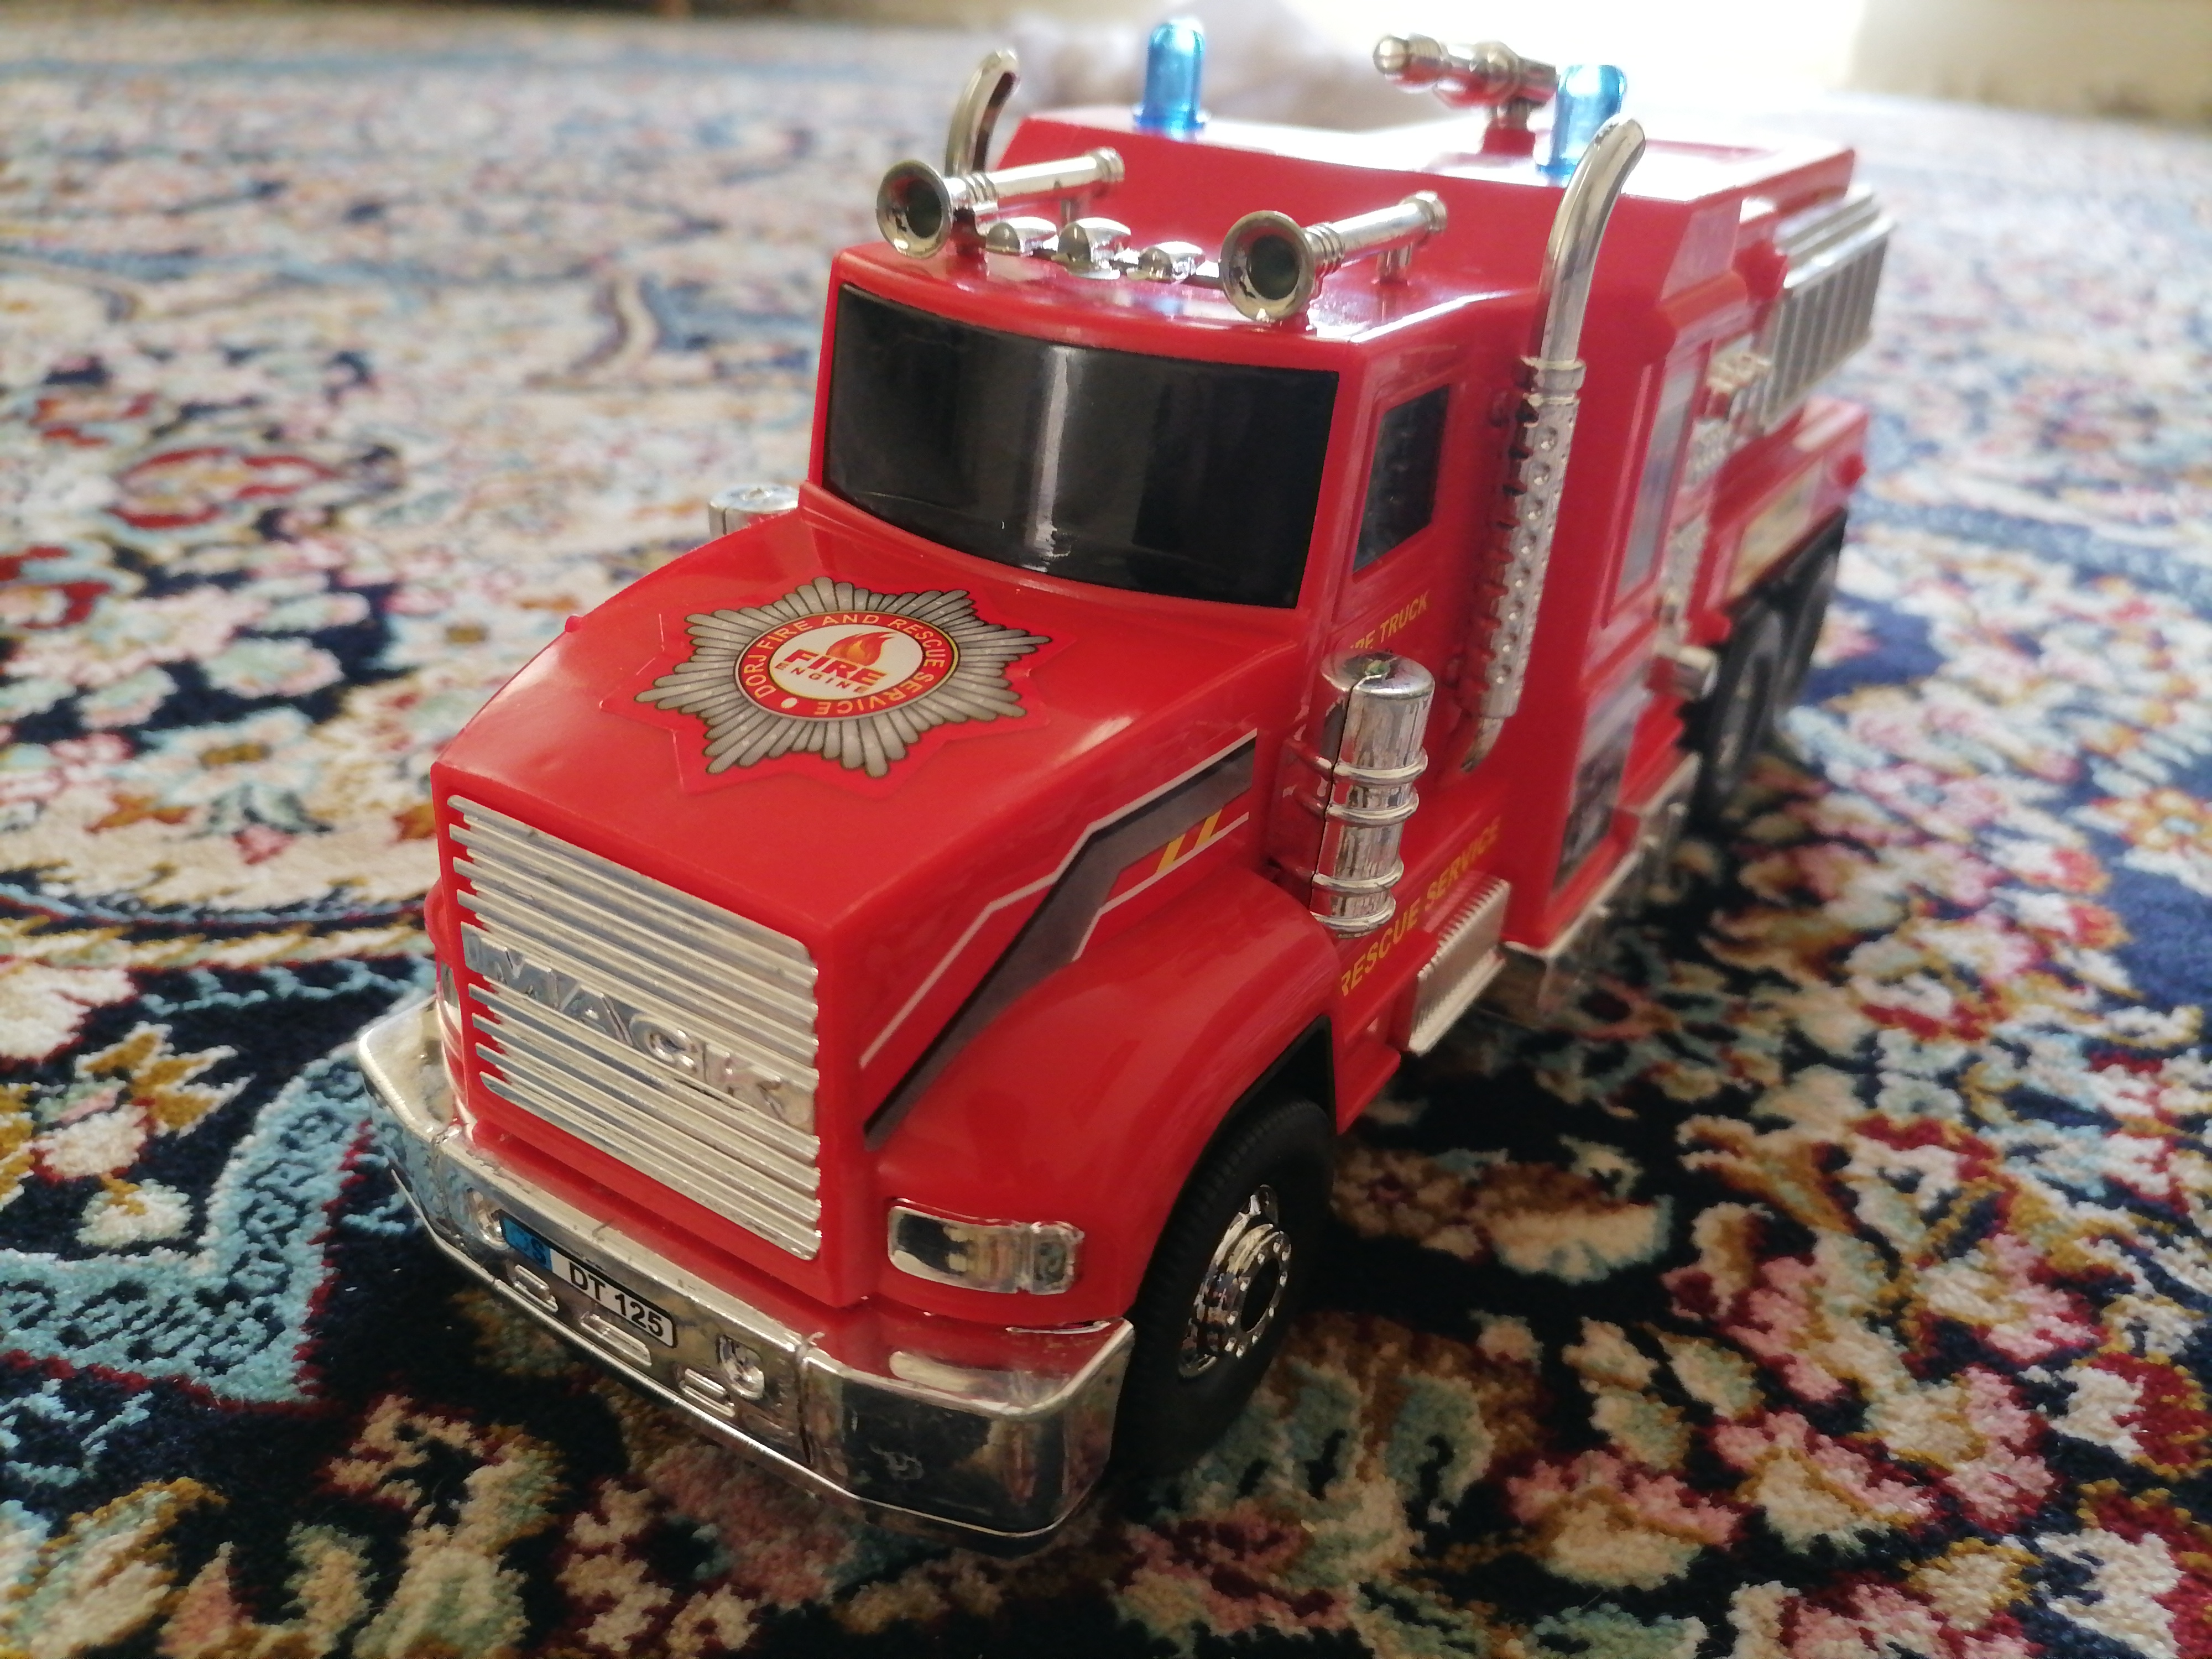 ماشین آتش نشانی اسباب بازی دورج توی طرح Fire Truck